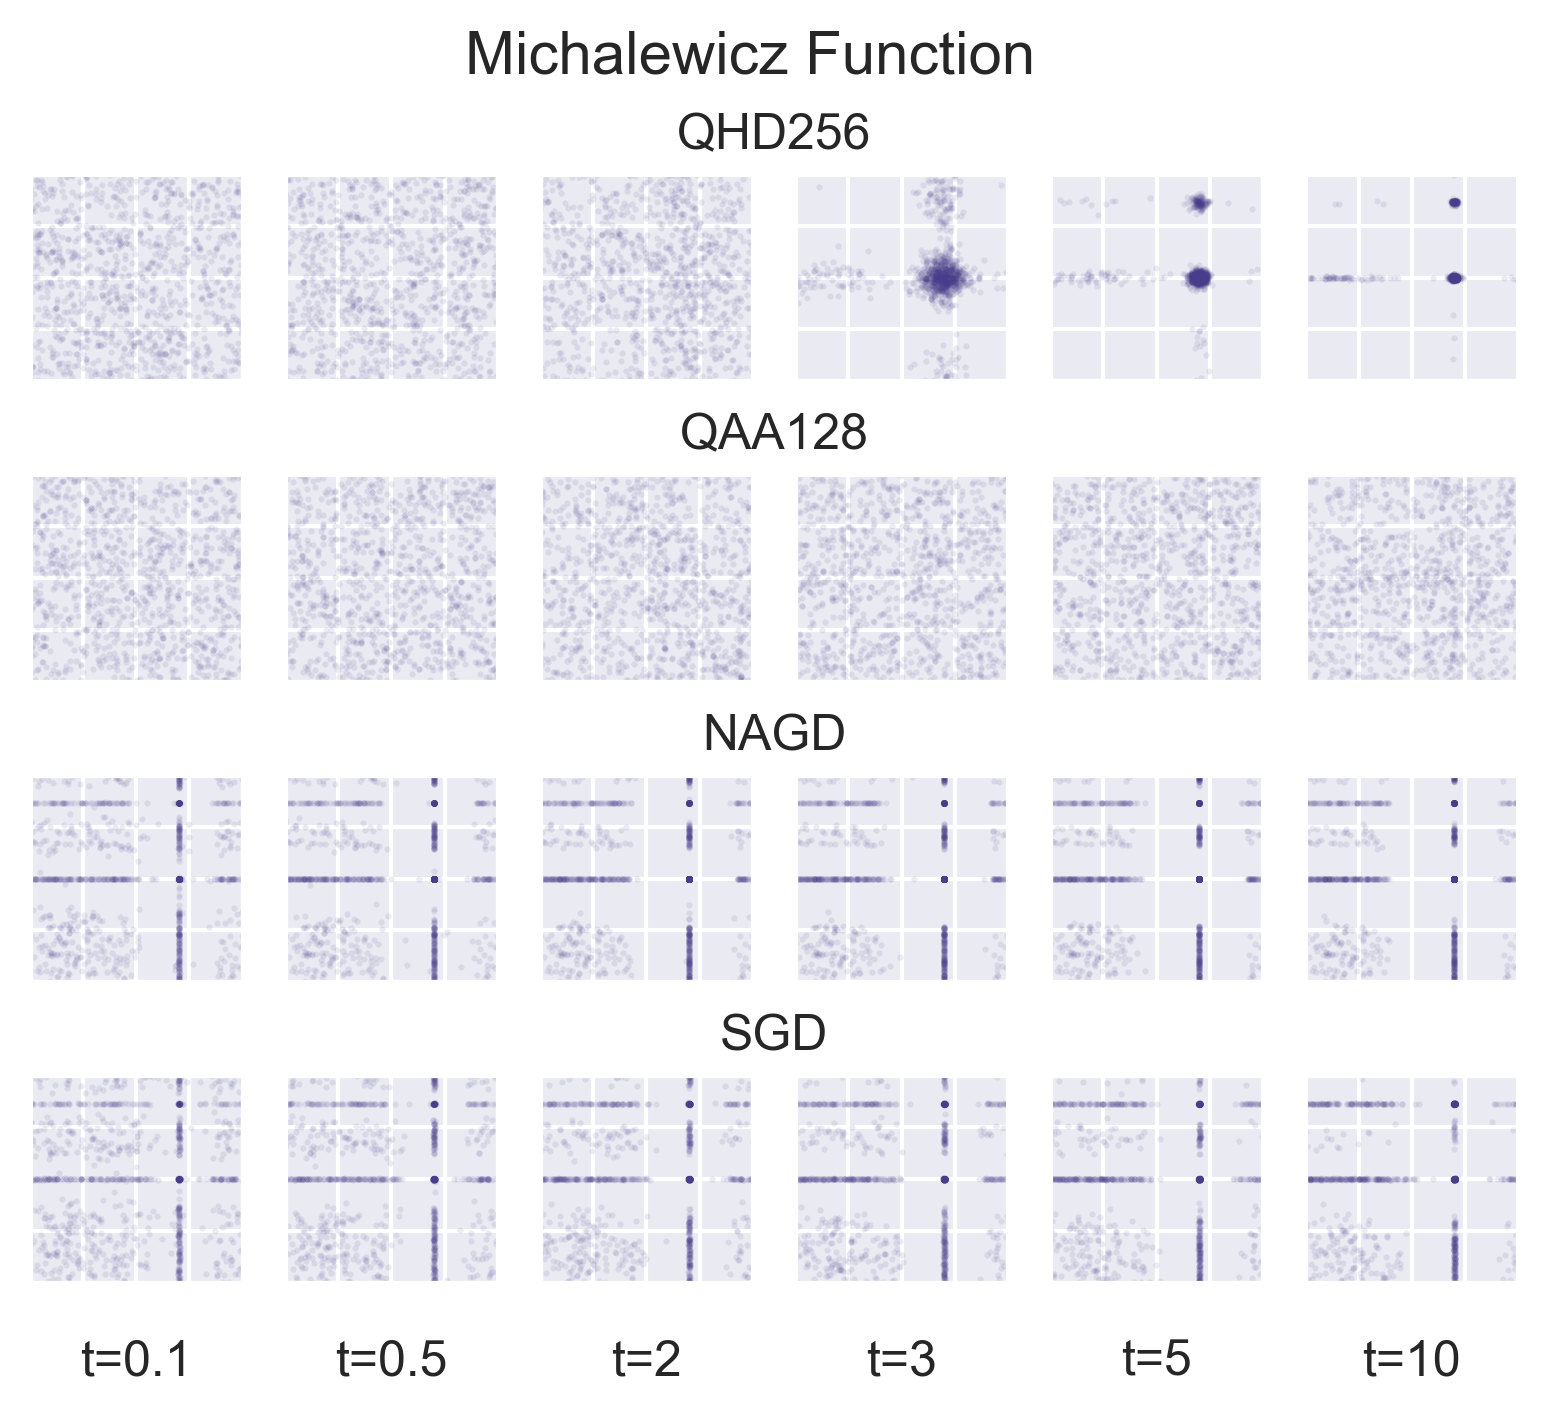 Comparison of optimization methods on michalewicz